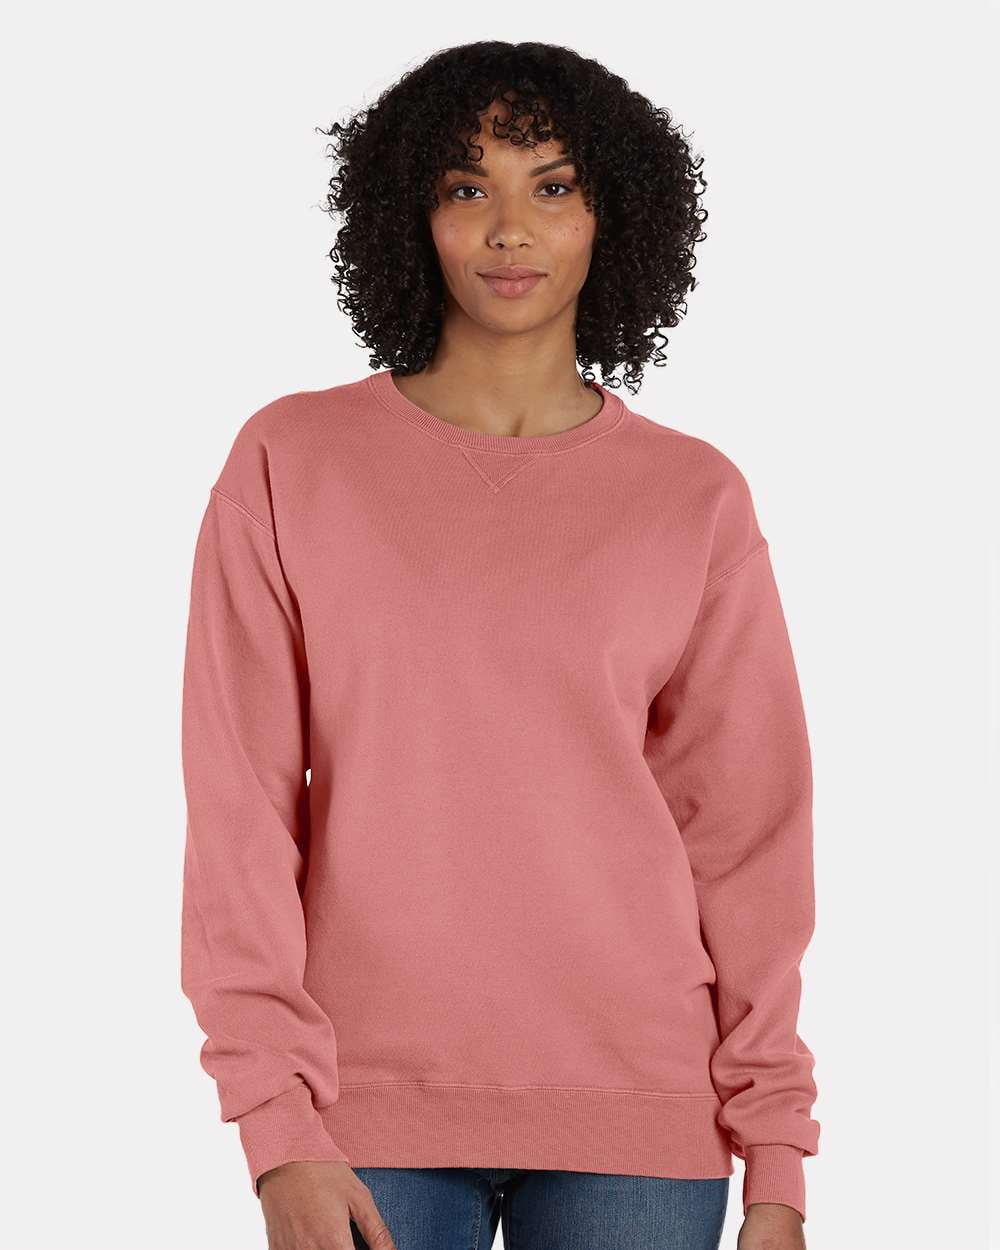 Hanes Mens Big ComfortWash Garment Dyed Fleece Sweatshirt, S, Texas Orange  